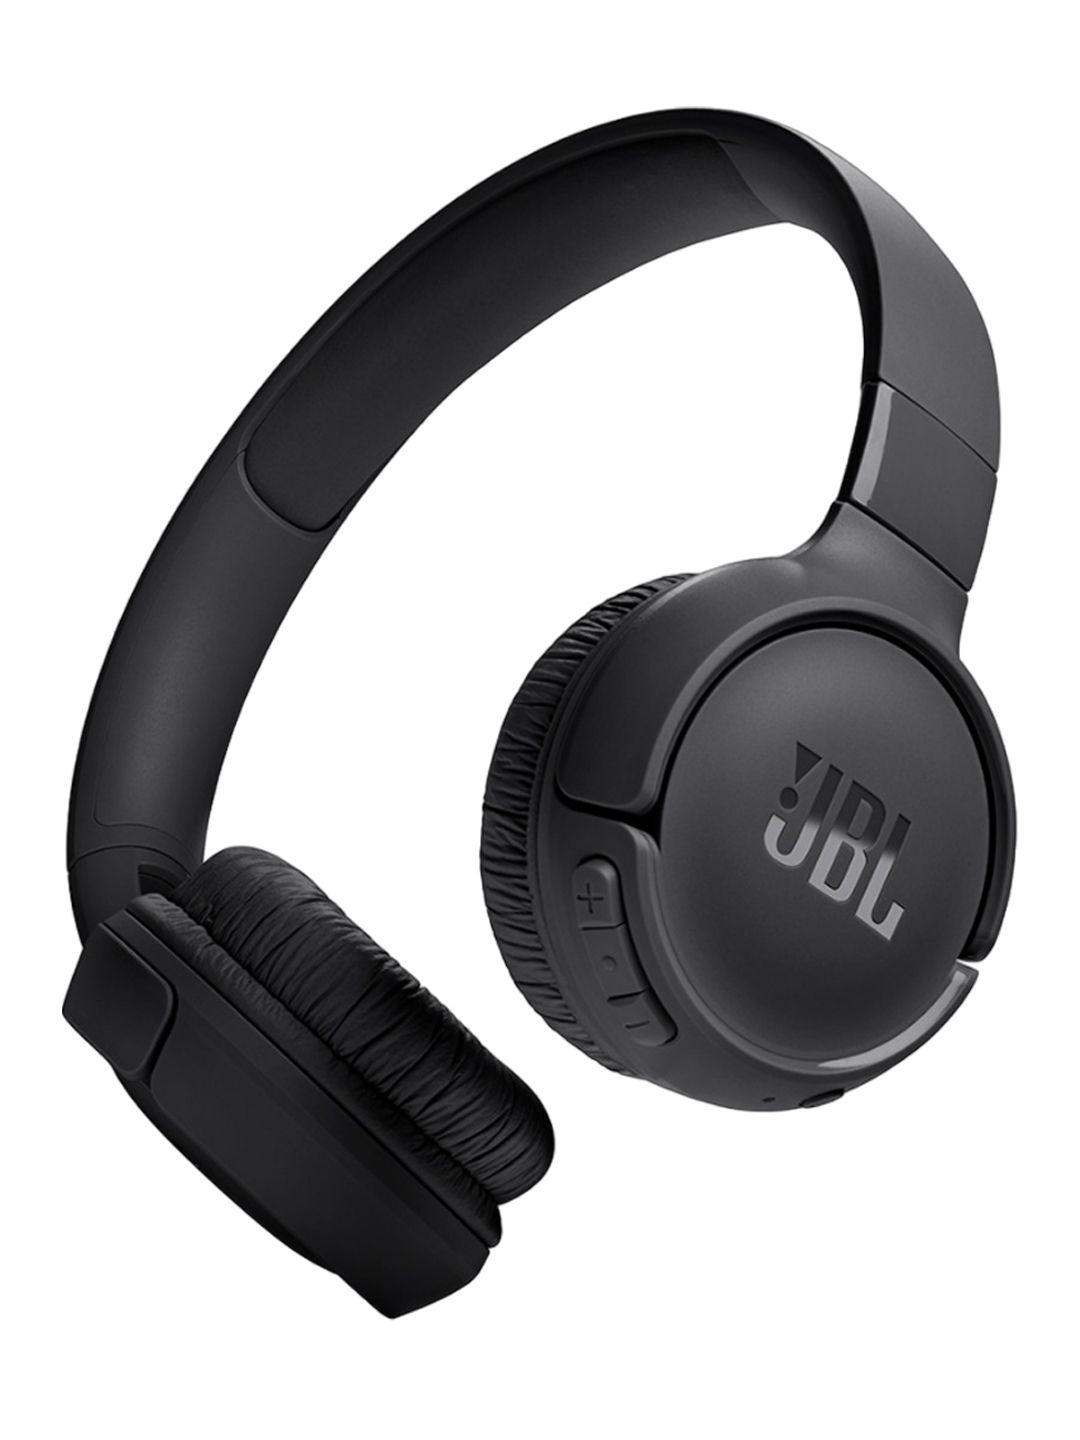 JBL Unisex Compact Folding Design Wireless Bluetooth Headphone